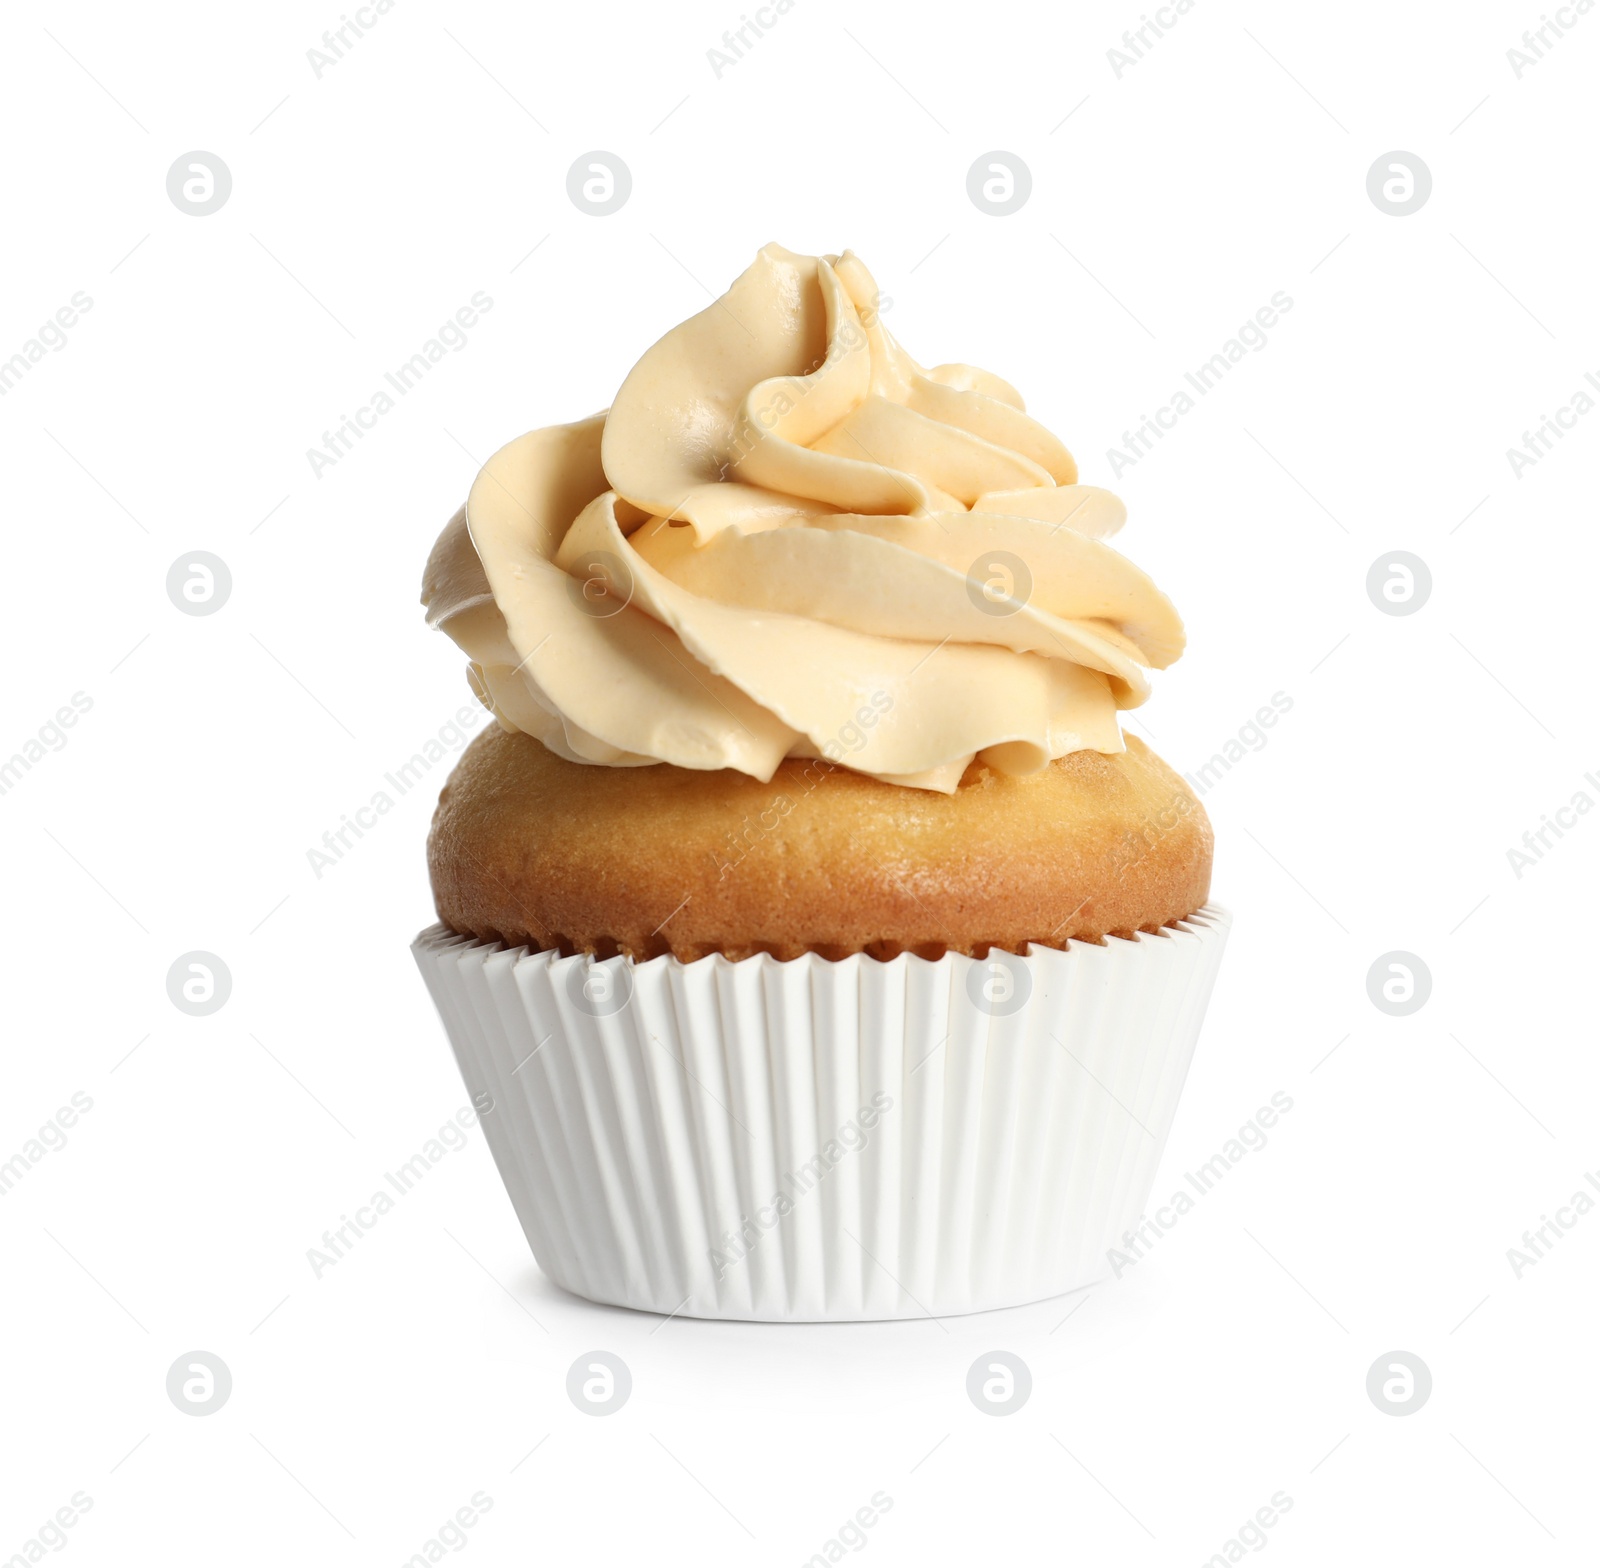 Photo of Delicious birthday cupcake on white background